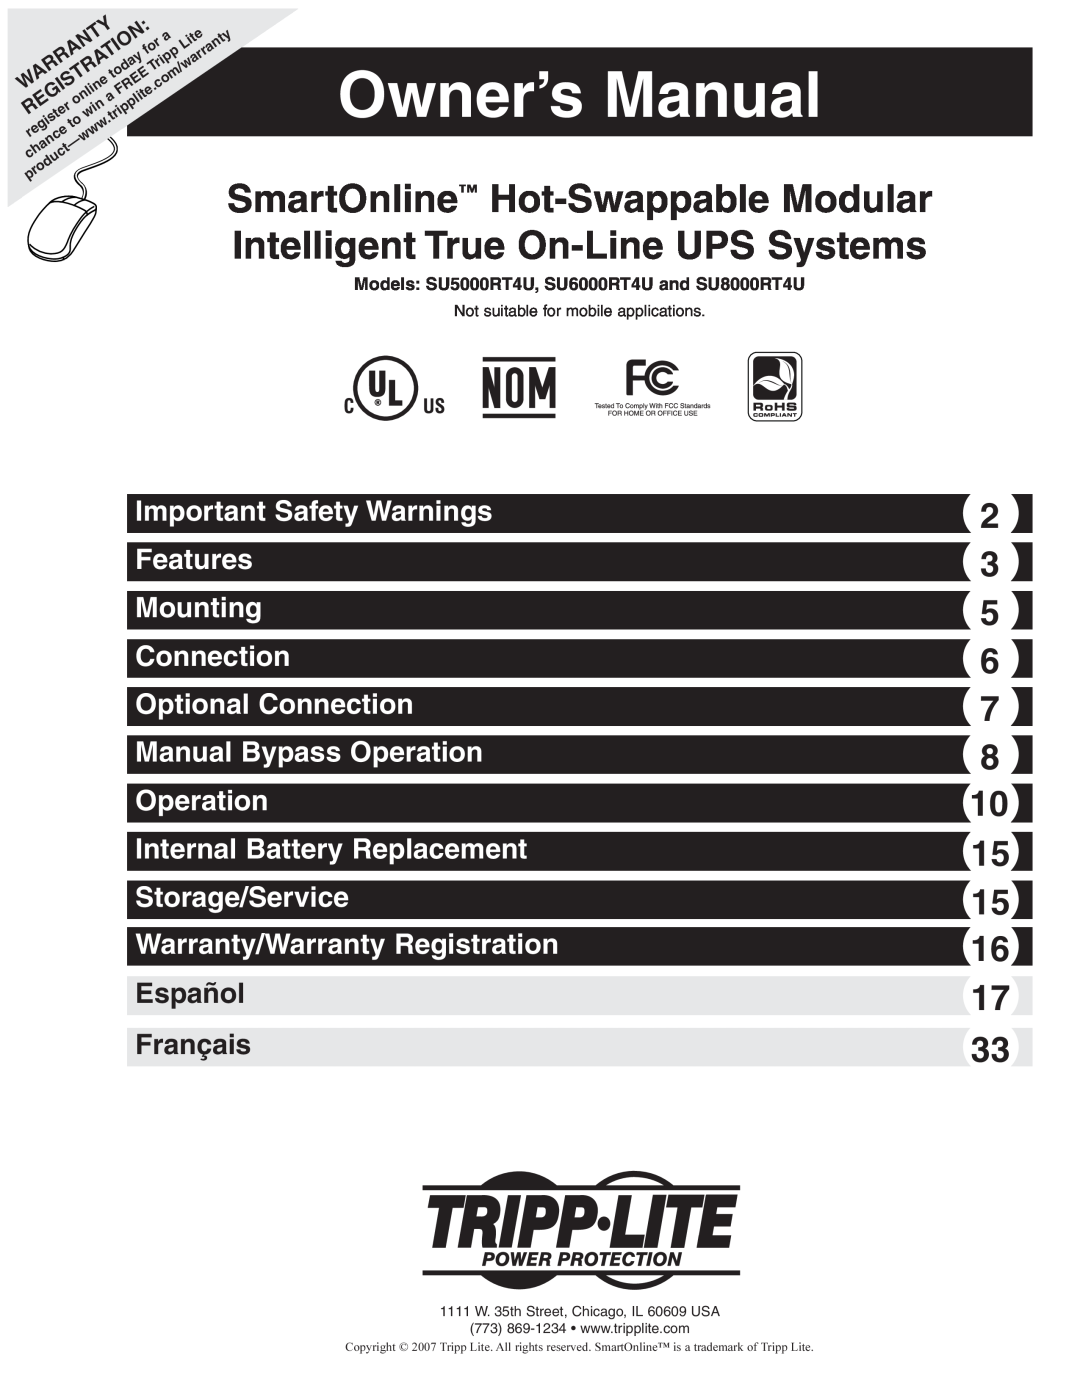 Tripp Lite SU6000RT4U owner manual Owner’s Manual, SmartOnline, Hot-Swappable Modular, Warranty/Warranty Registration 